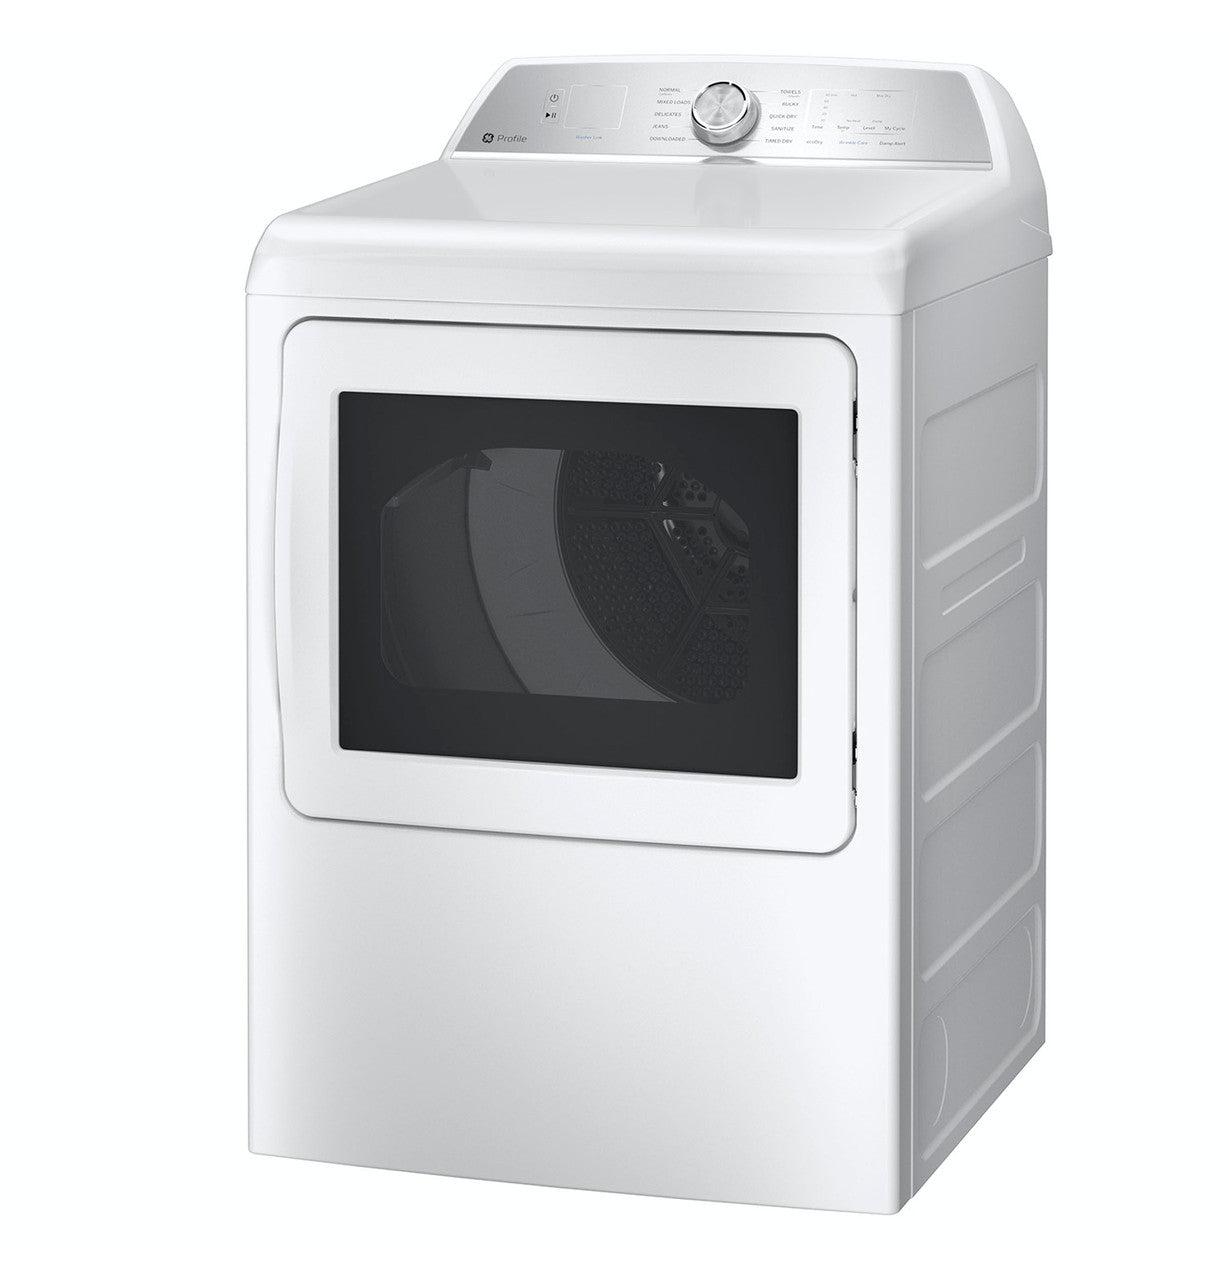 GE Profile - 7.4 cu. Ft  Gas Dryer in White - PTD60GBSRWS